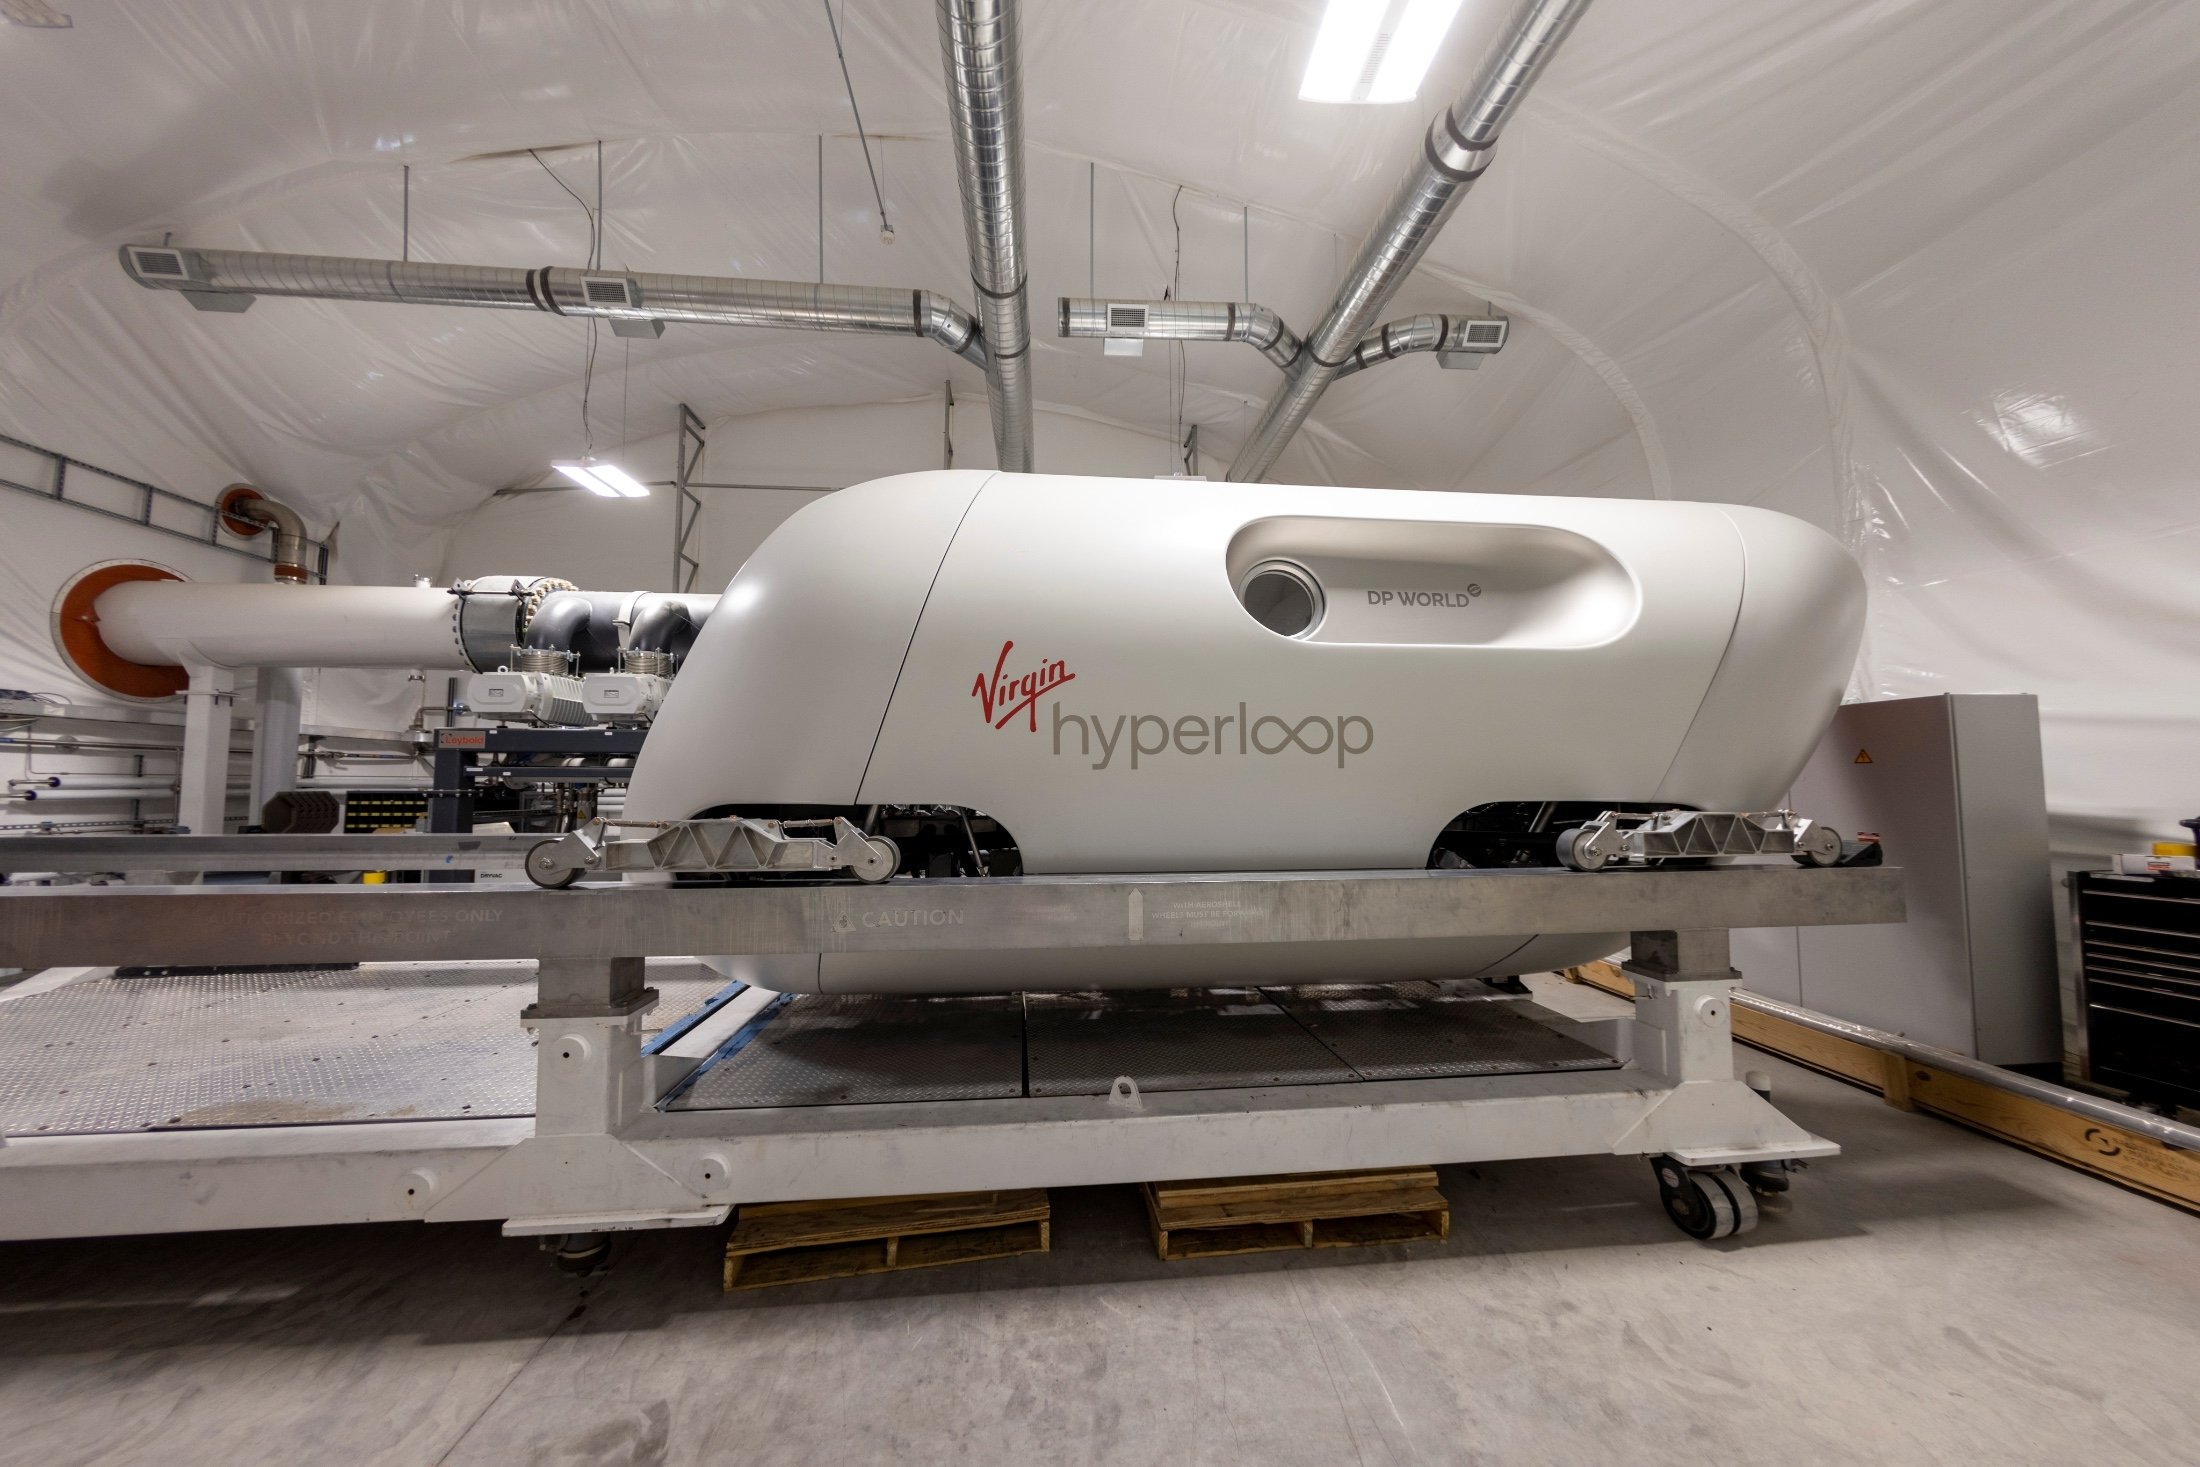 A prototype hyper loop pod is seen at the Virgin Hyperloop facility near Las Vegas, Nevada, U.S., May 5, 2021. (Reuters Photo)